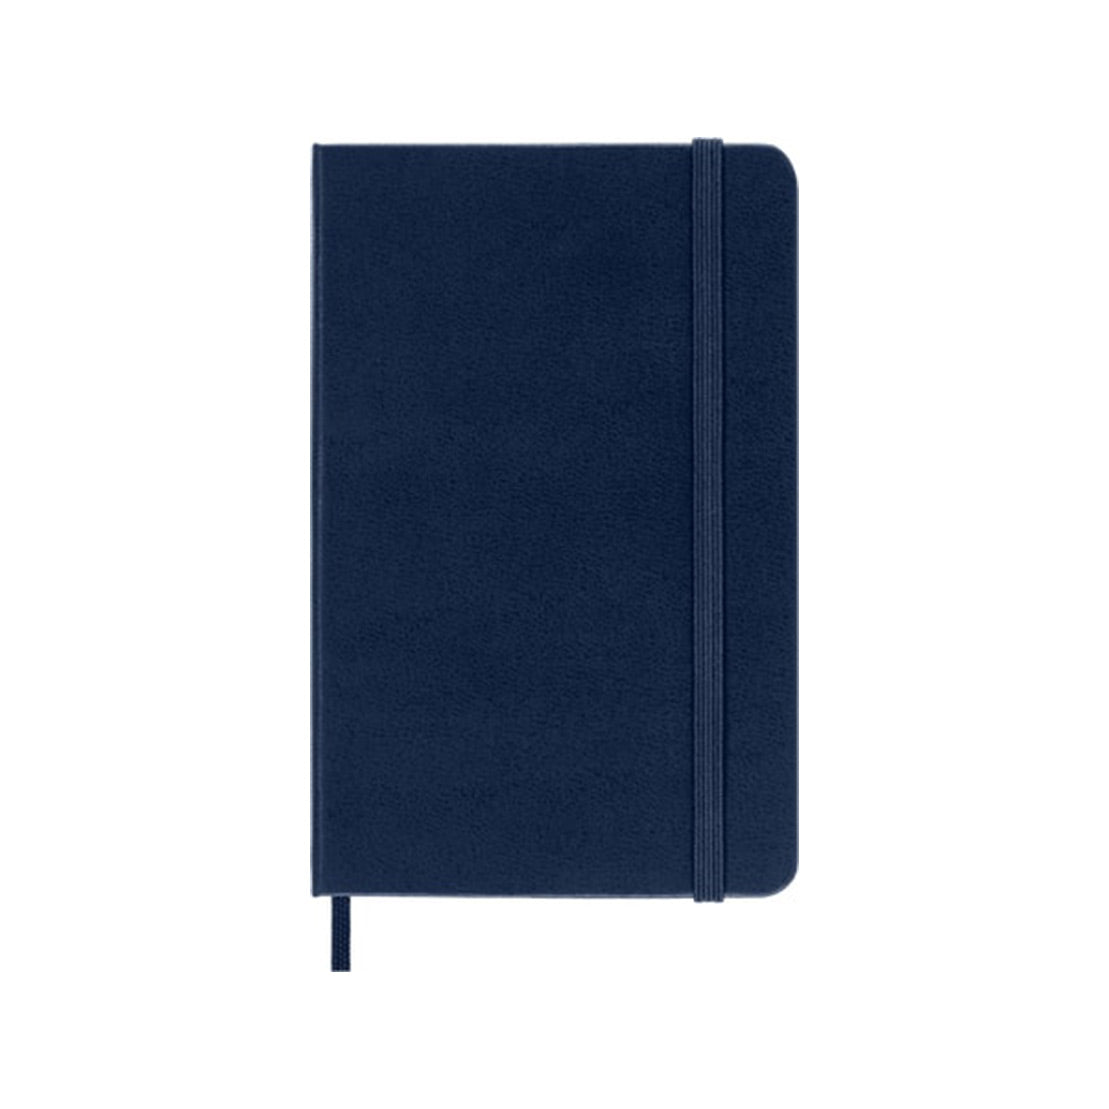 Moleskine Pocket Notebook Hard Cover Ruled Navy Blue